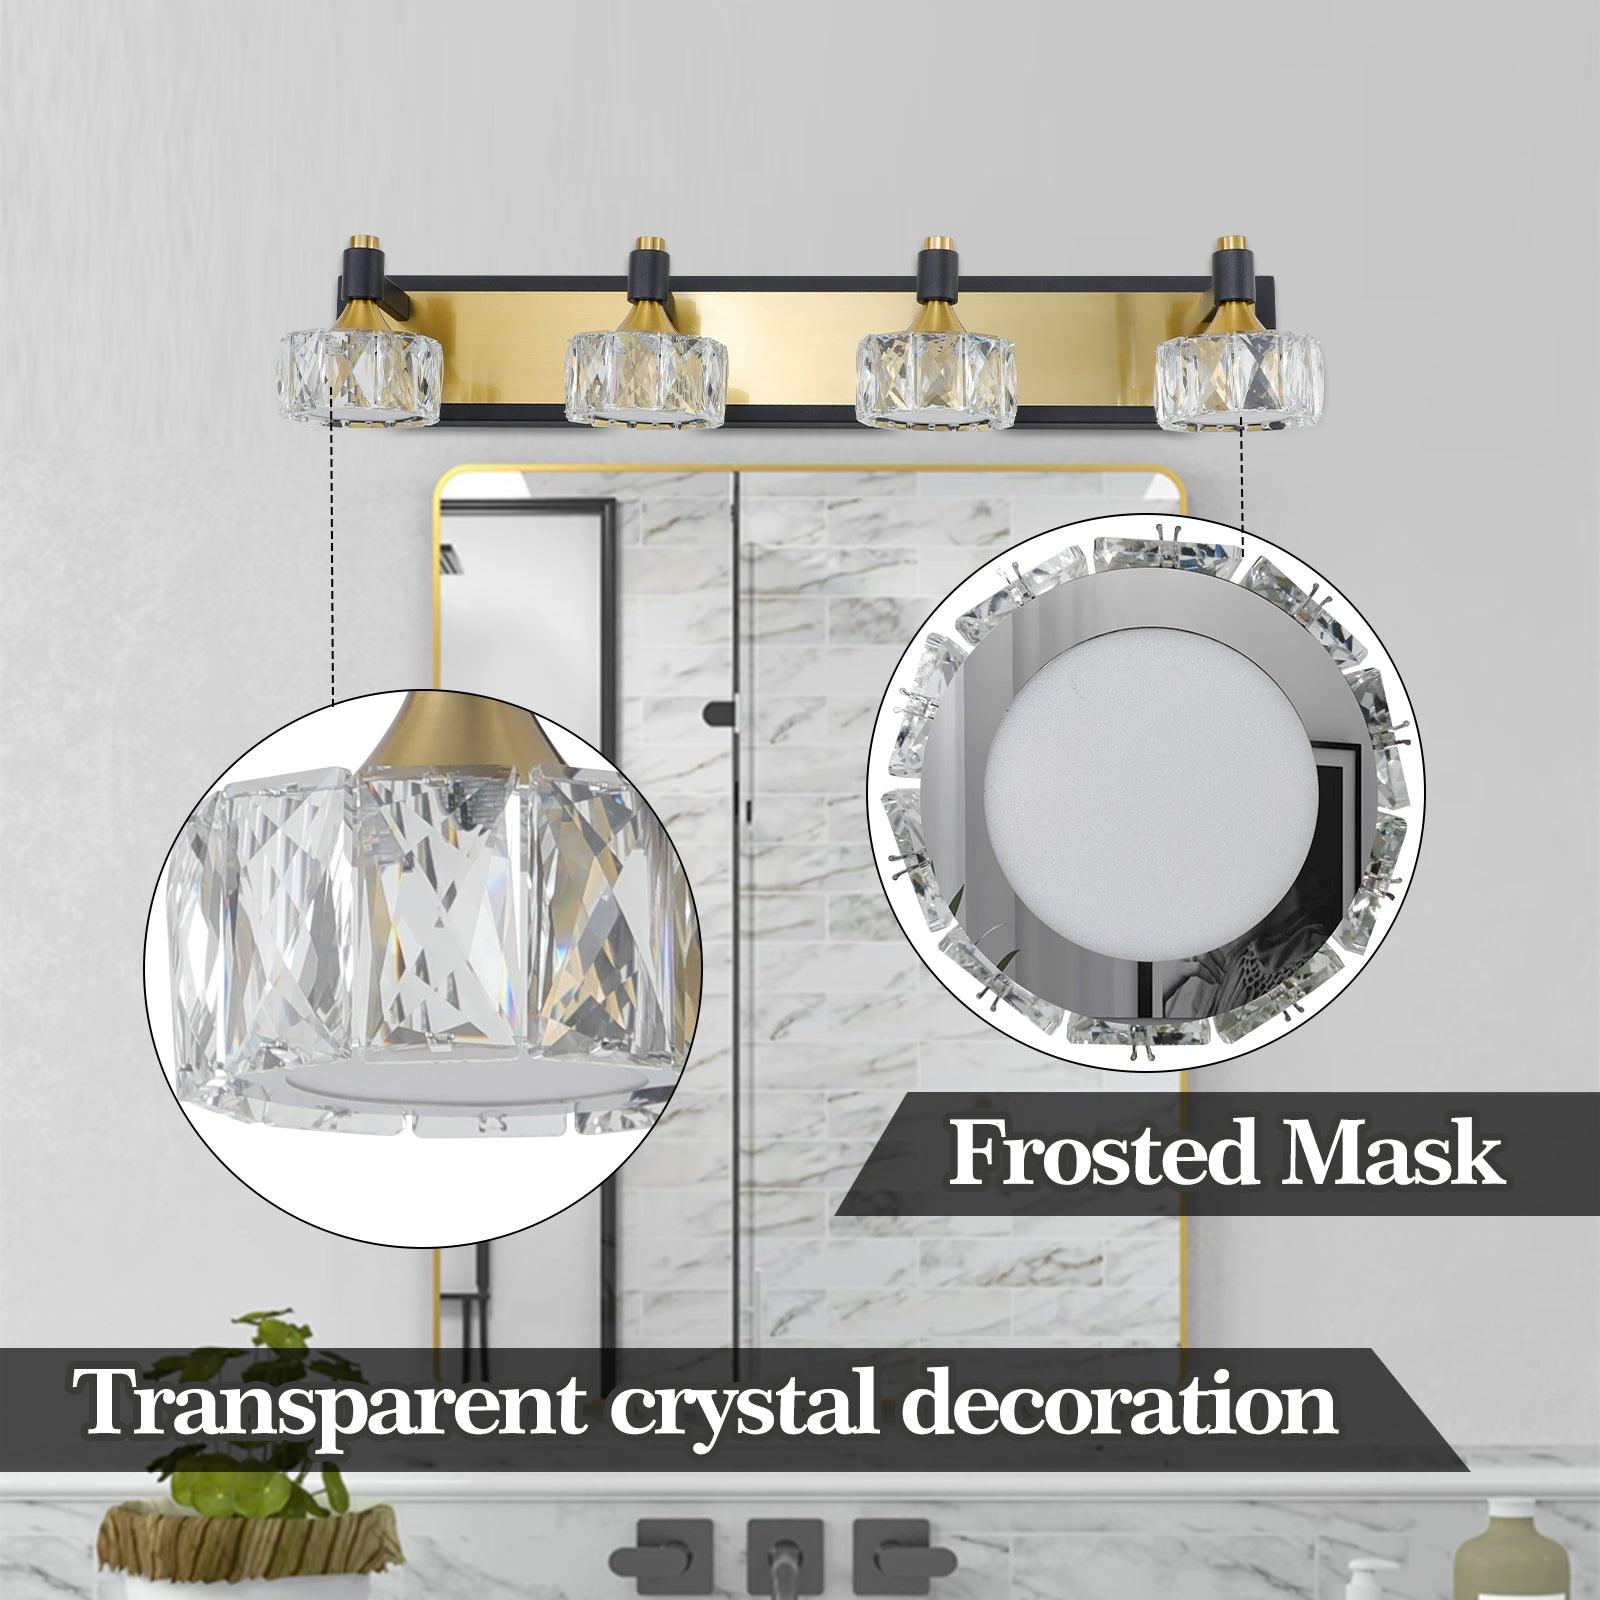 LED 4-Light Modern Crystal Bathroom Vanity Light Over Mirror Bath Wall Lighting Fixtures - FurniFindUSA